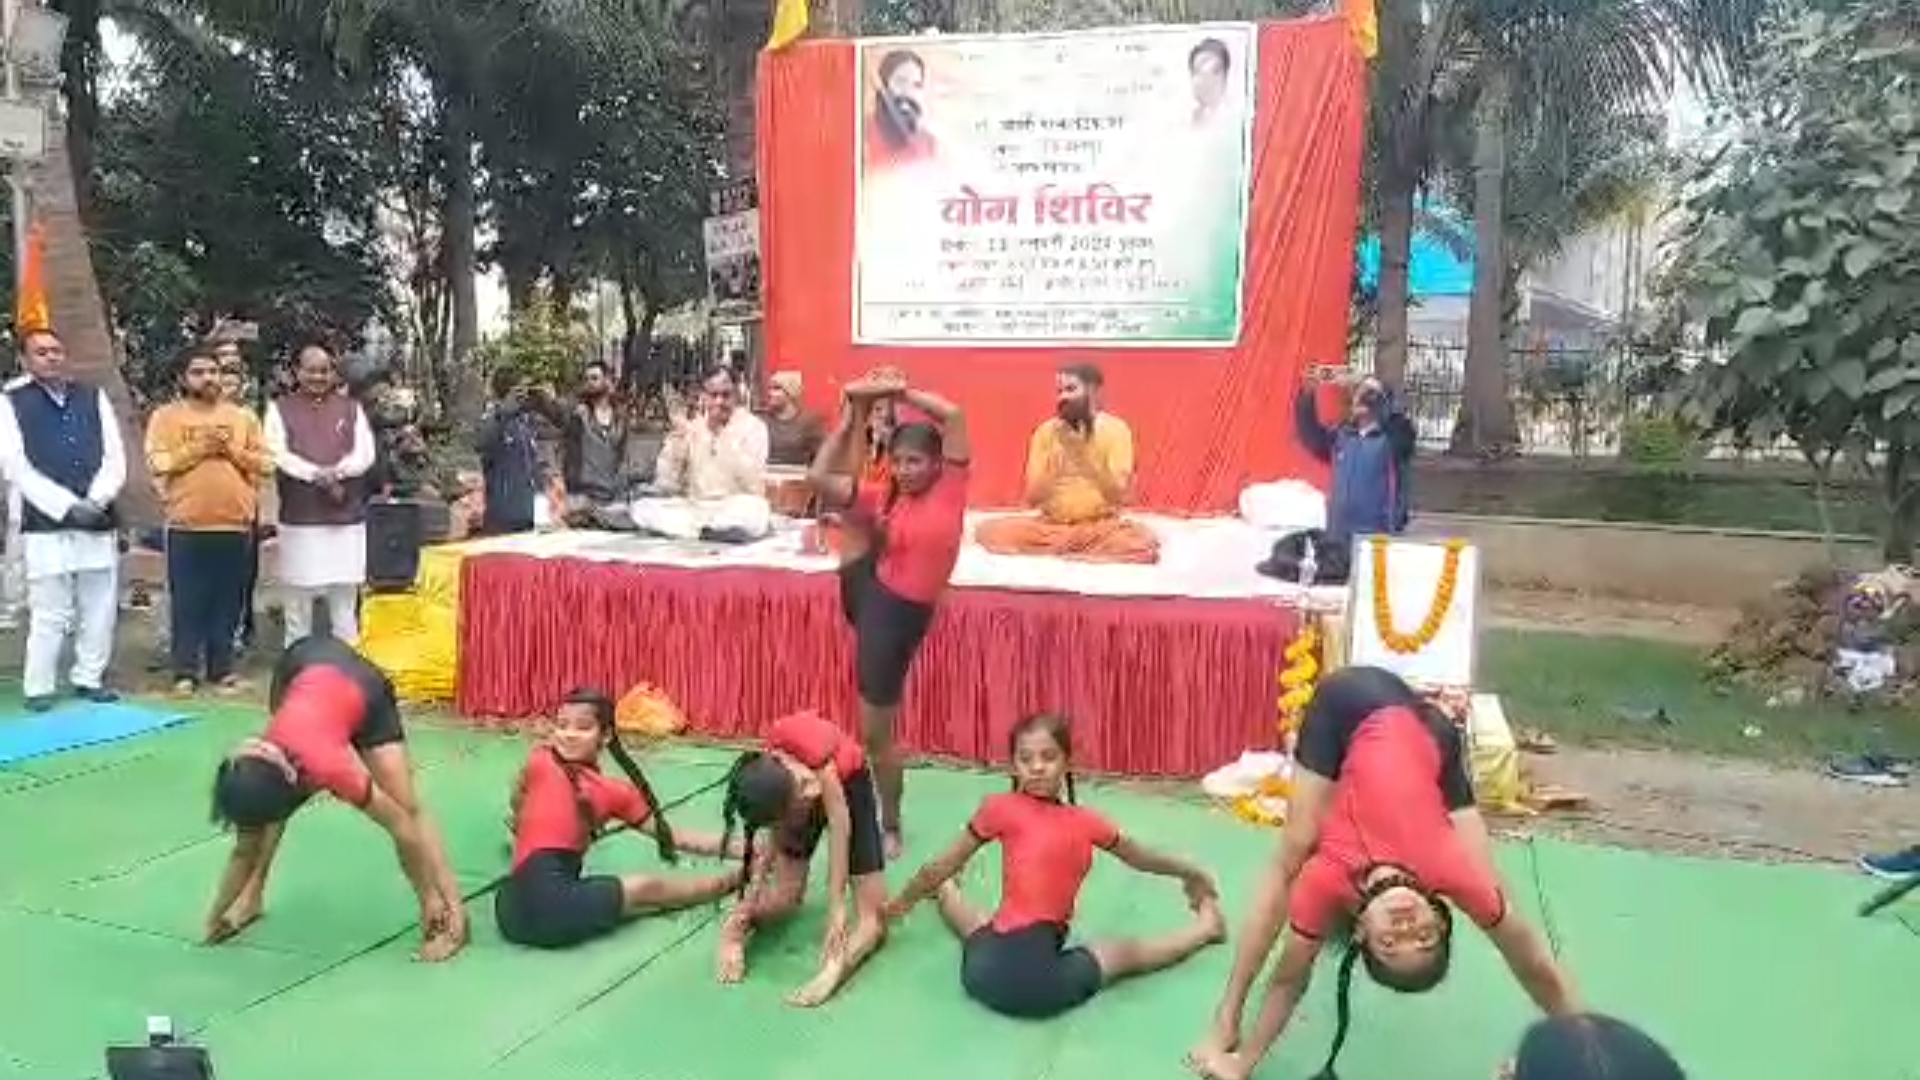 Yoga camp organized in Raipur